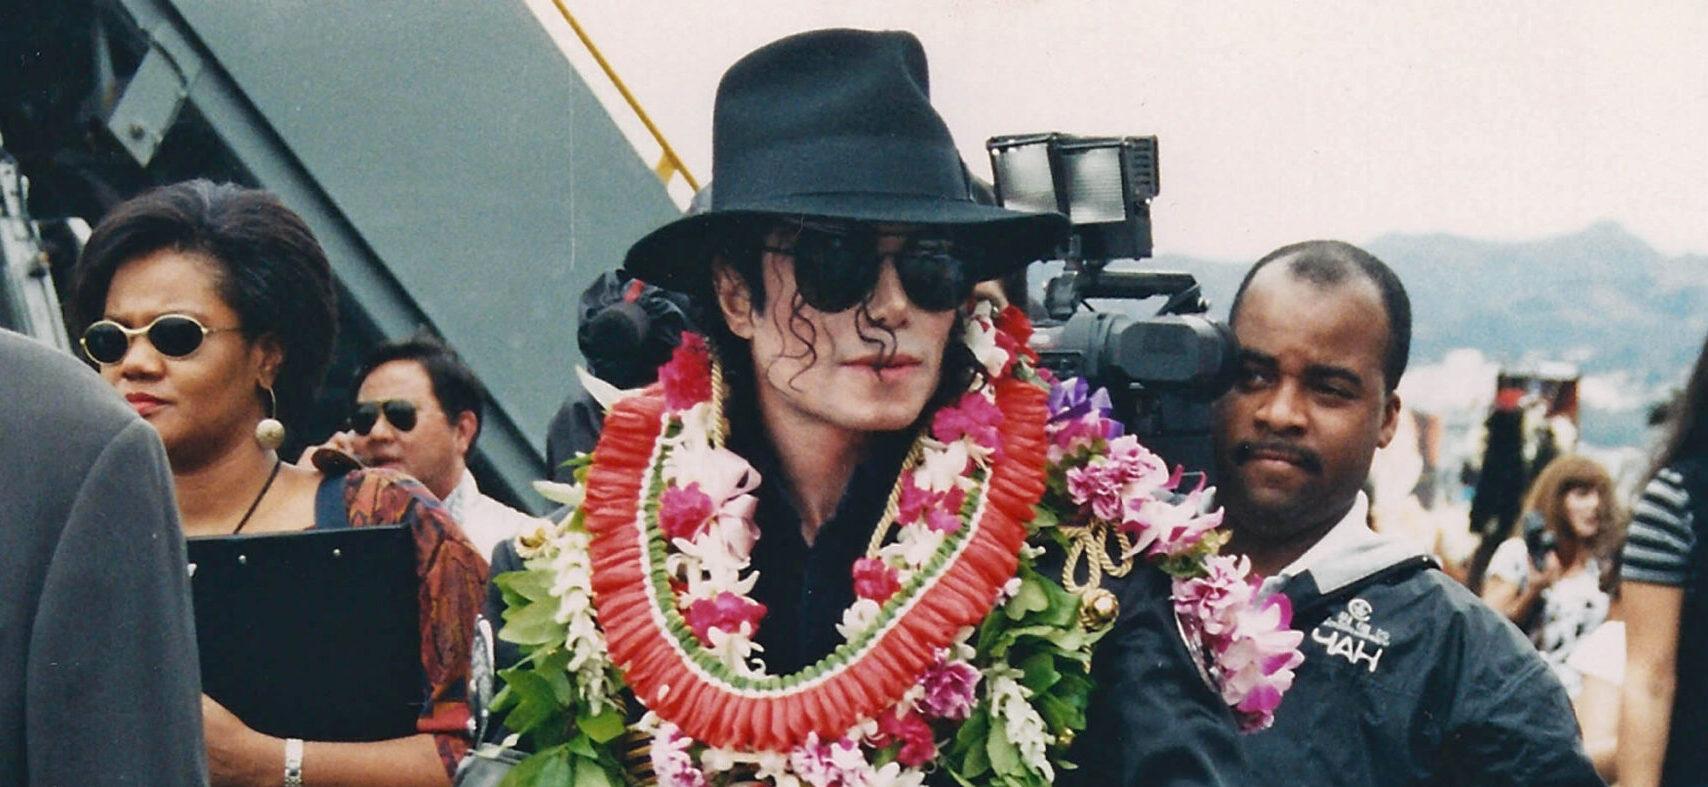 Michael Jackson, David Copperfield Among Big Names Revealed In Jeffrey Epstein ‘List’